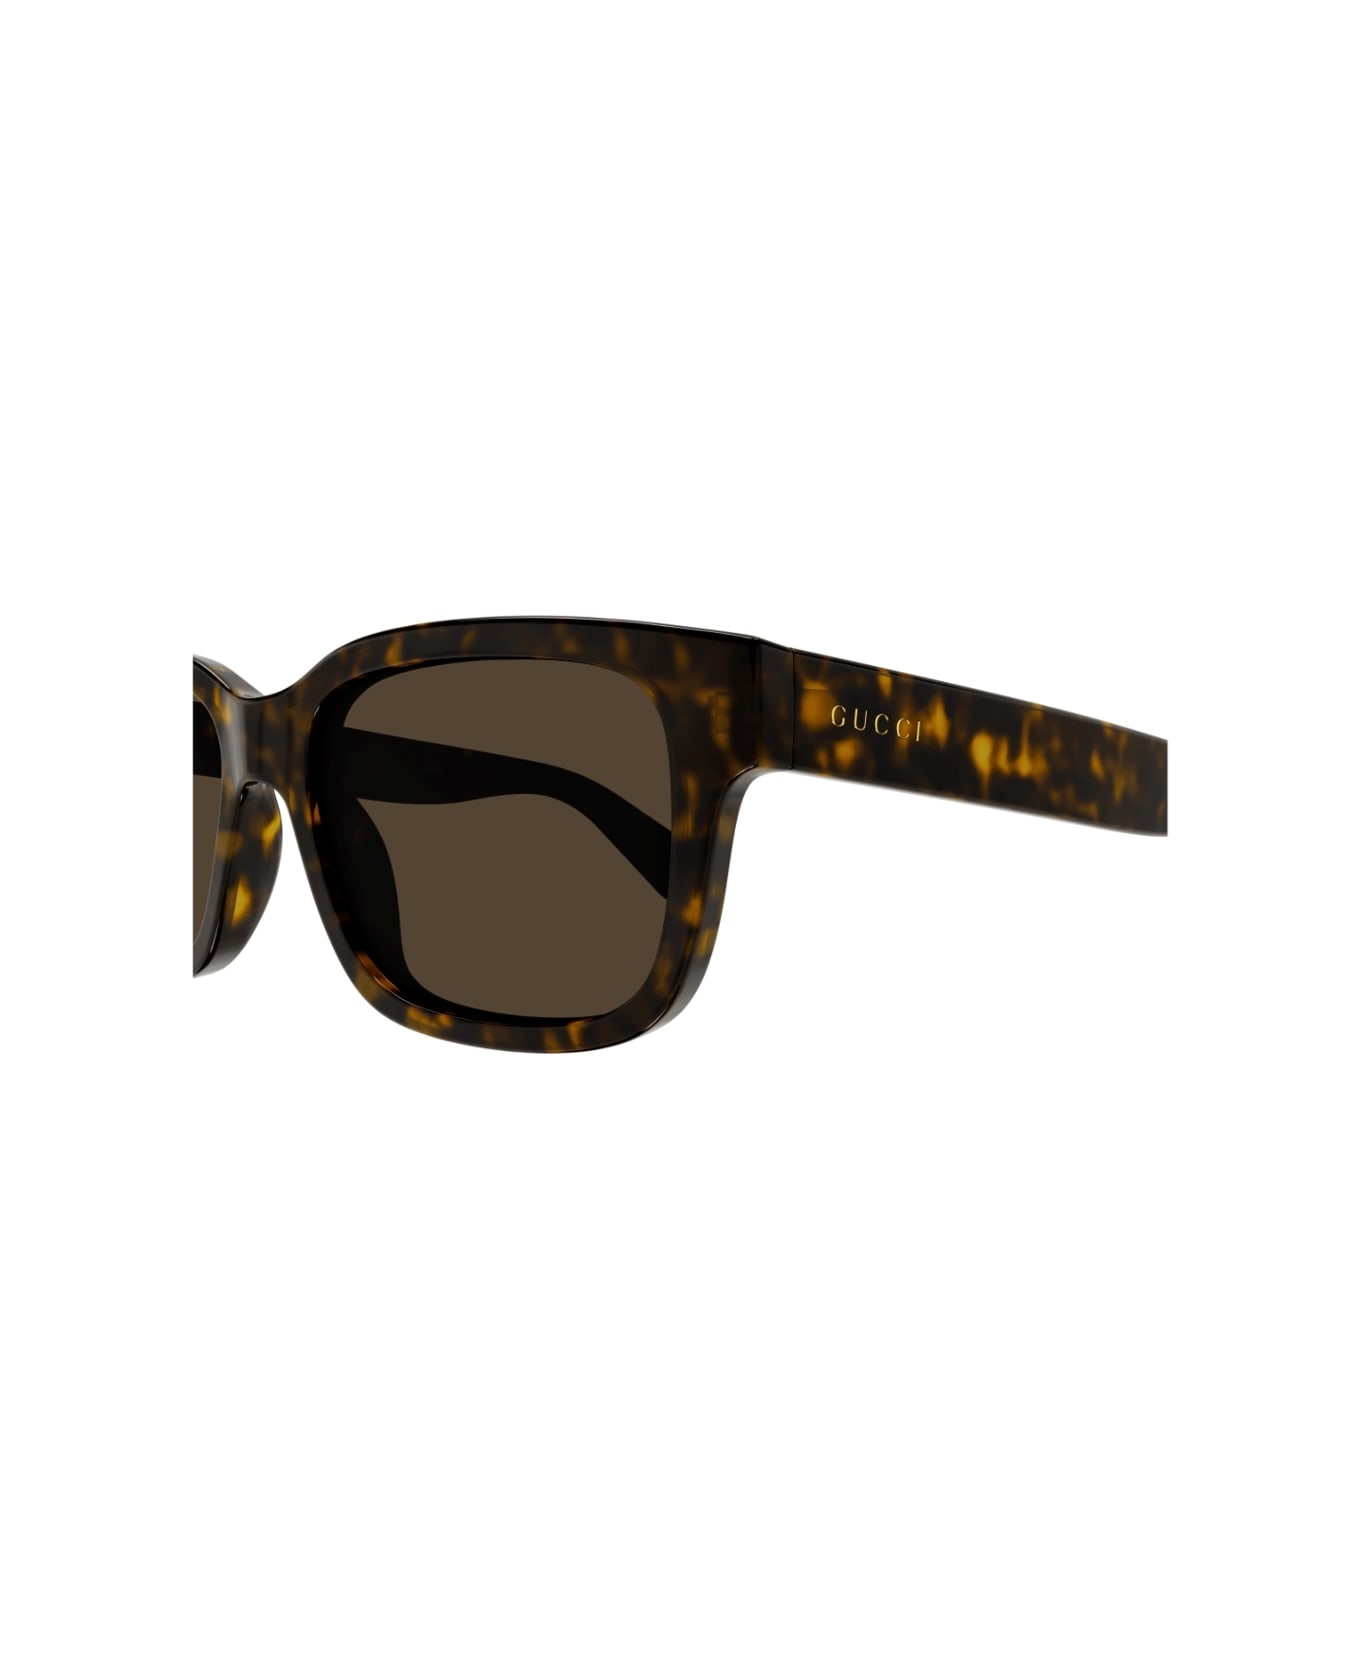 Gucci Eyewear GG1583s 002 Sunglasses サングラス